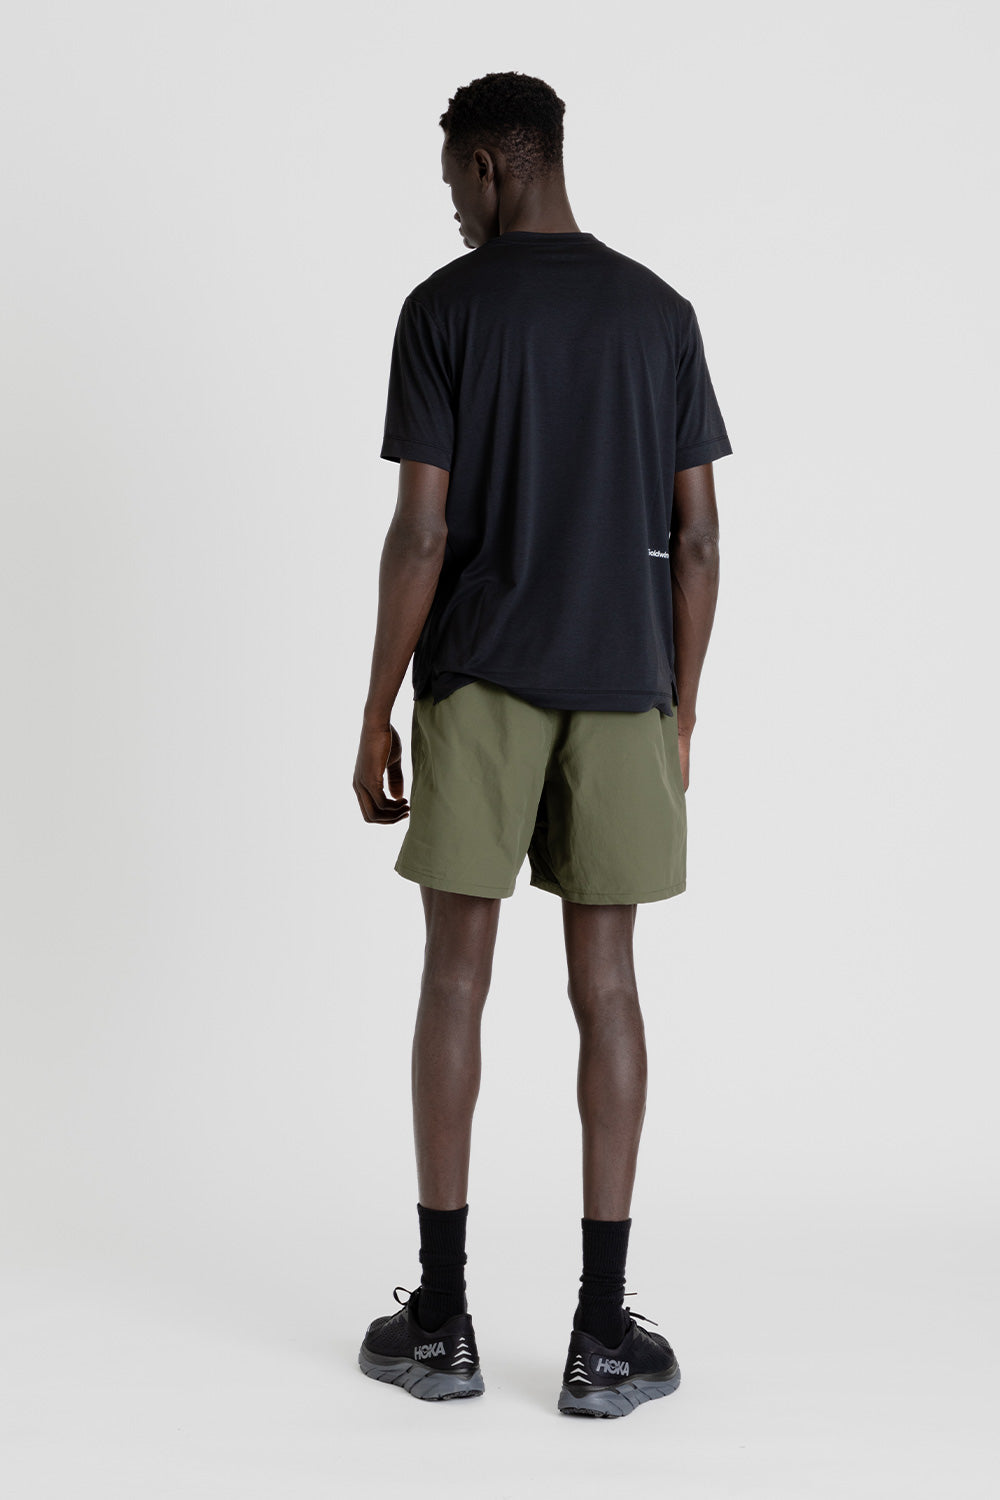 goldwin-nylon-shorts-5-inches-olive-green